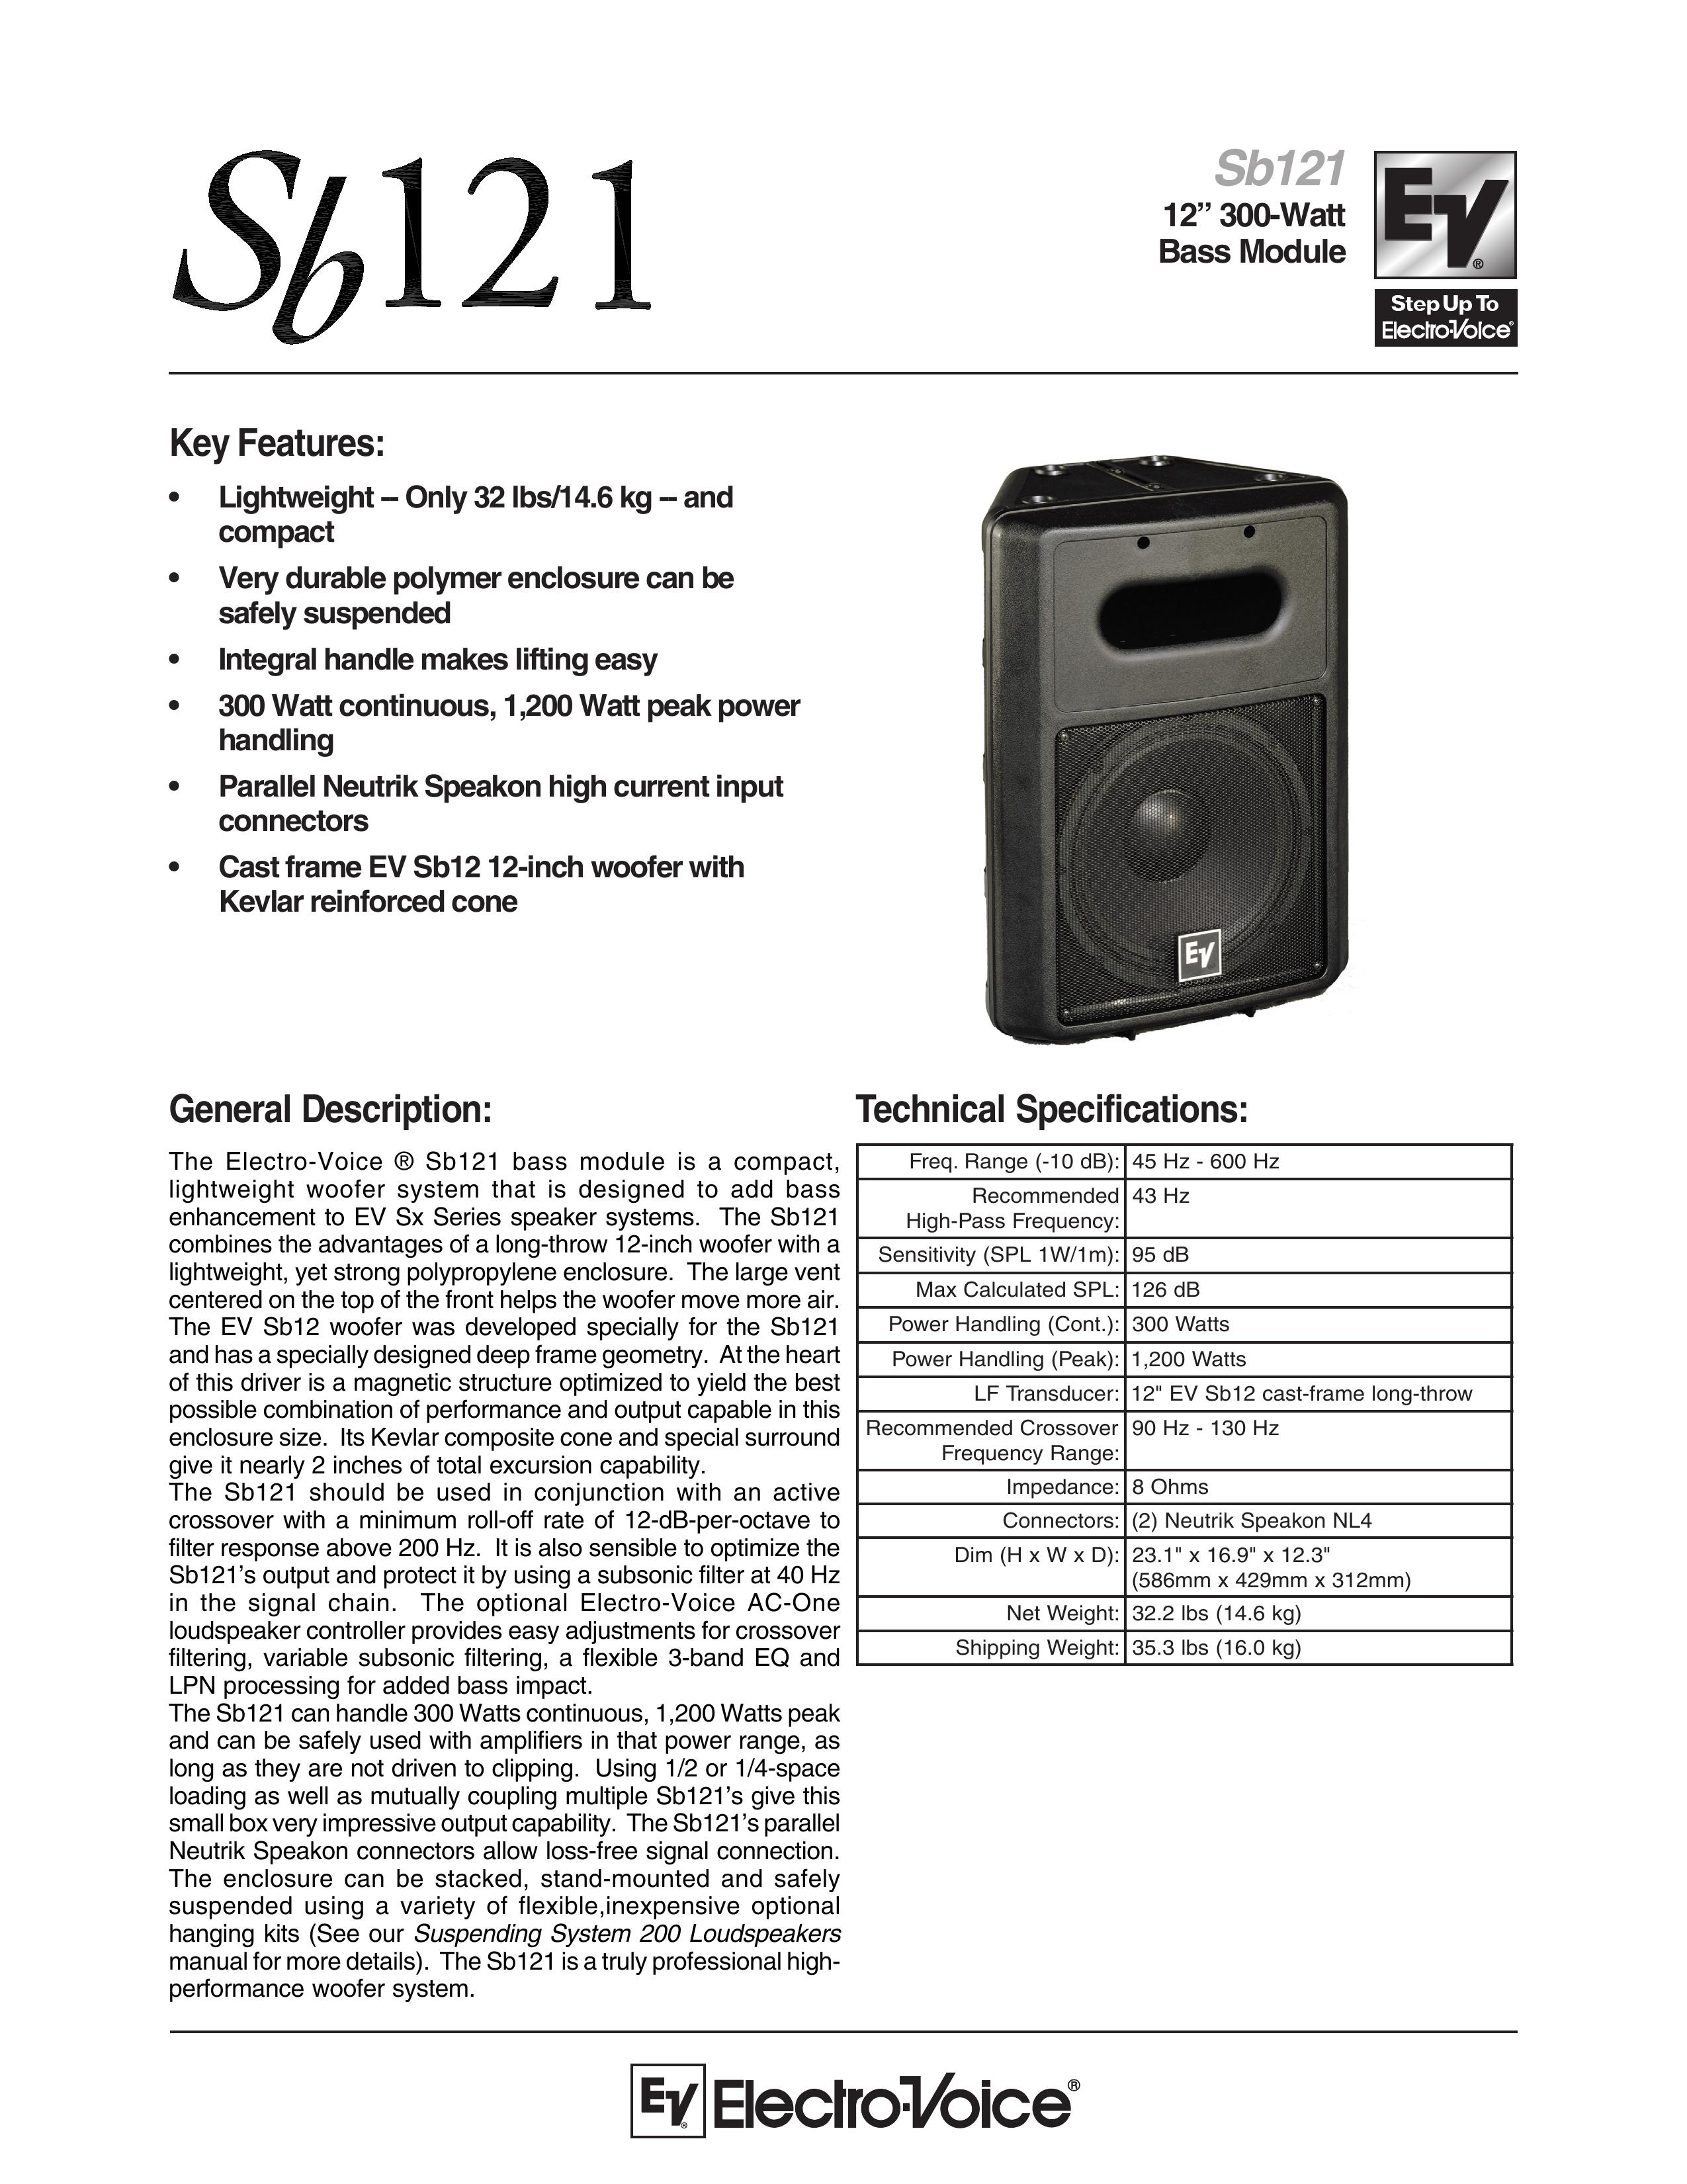 Electro-Voice SB121 DJ Equipment User Manual